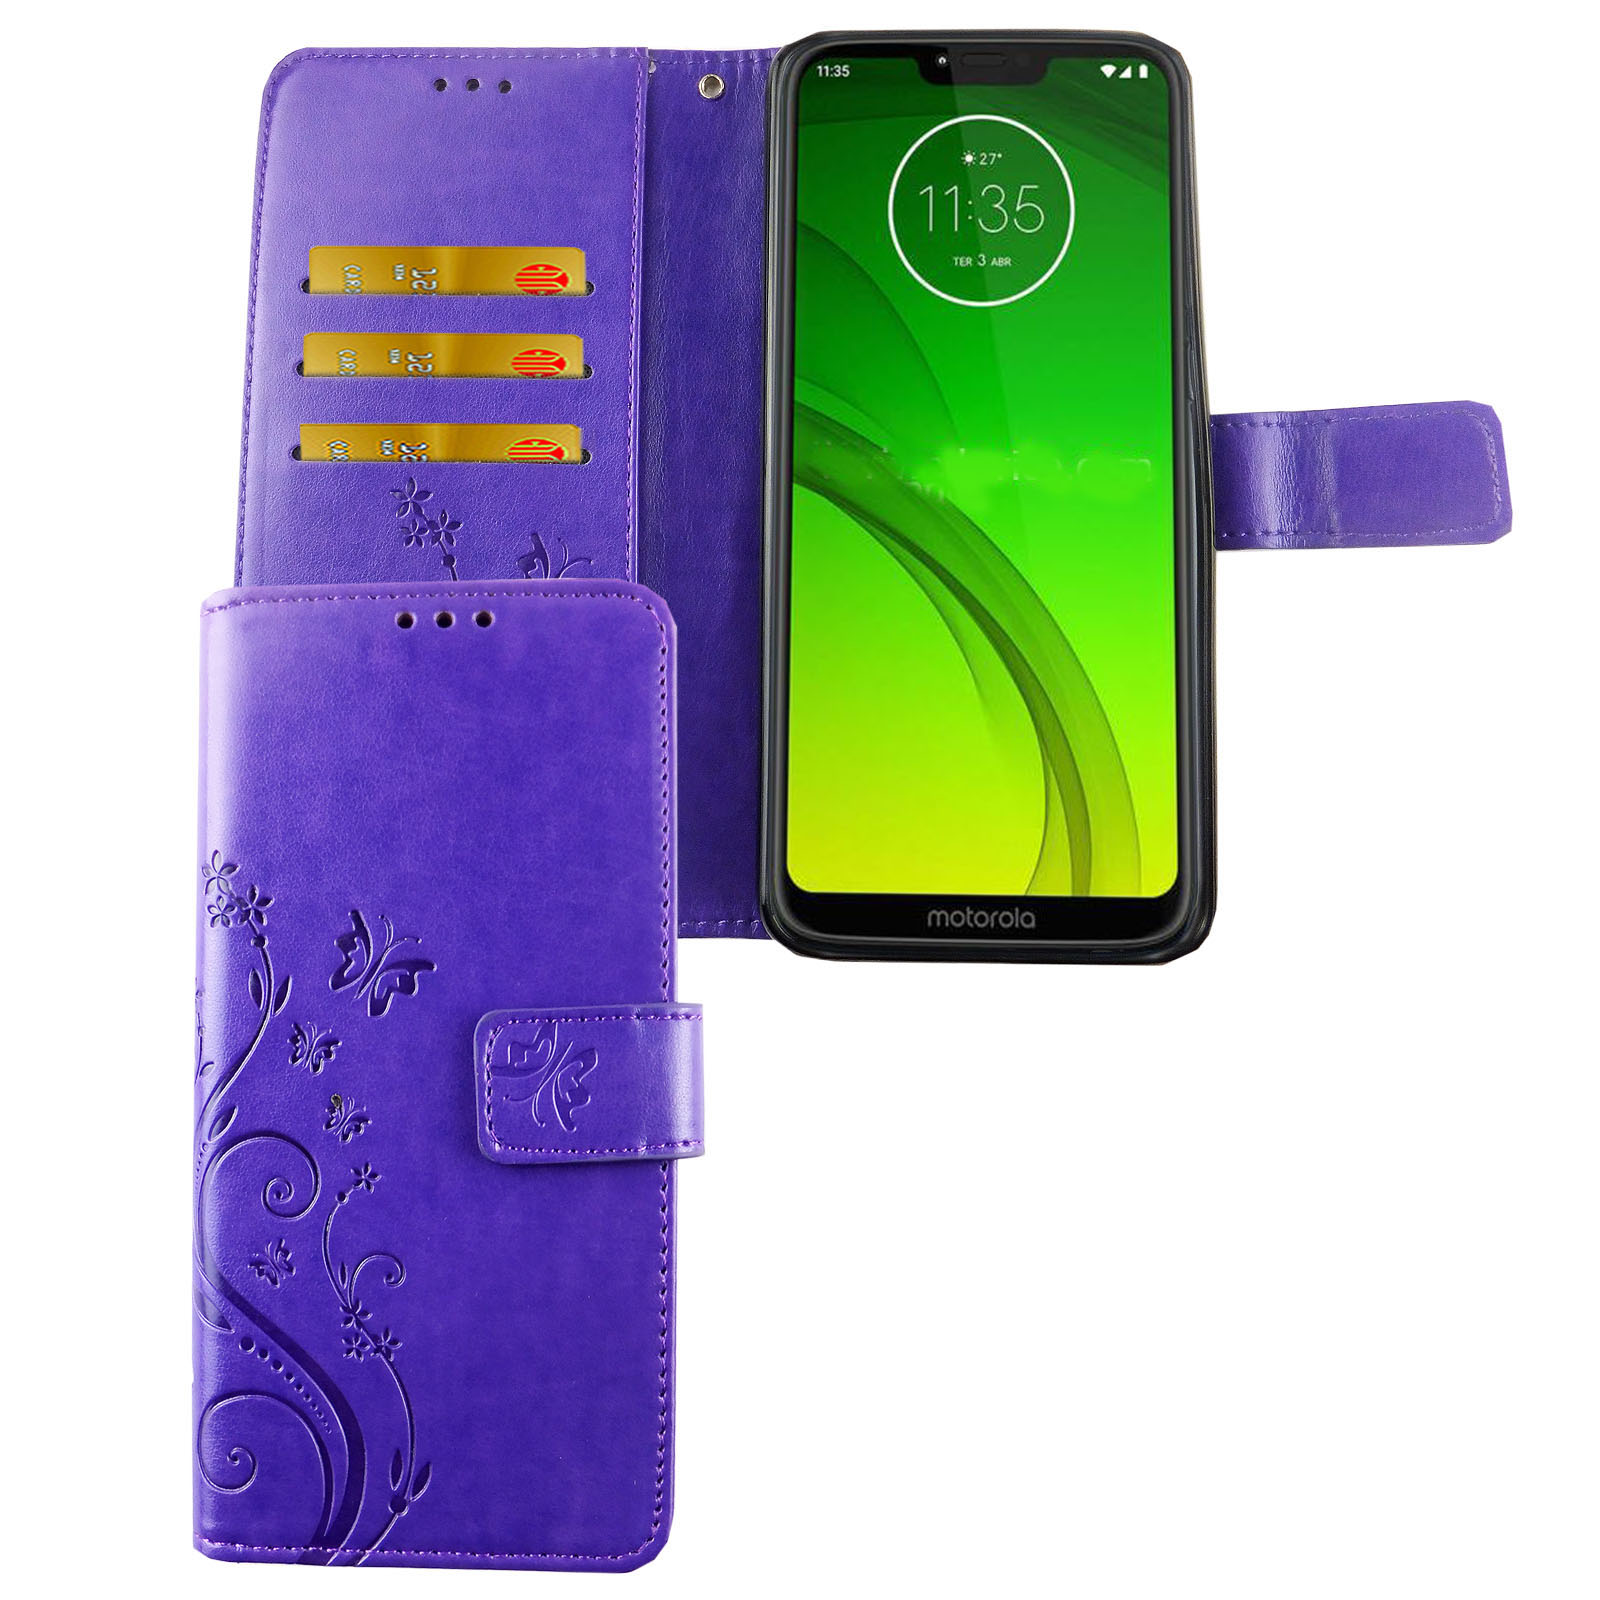 Motorola, Violett Handyhülle, DESIGN Moto Bookcover, KÖNIG G7,